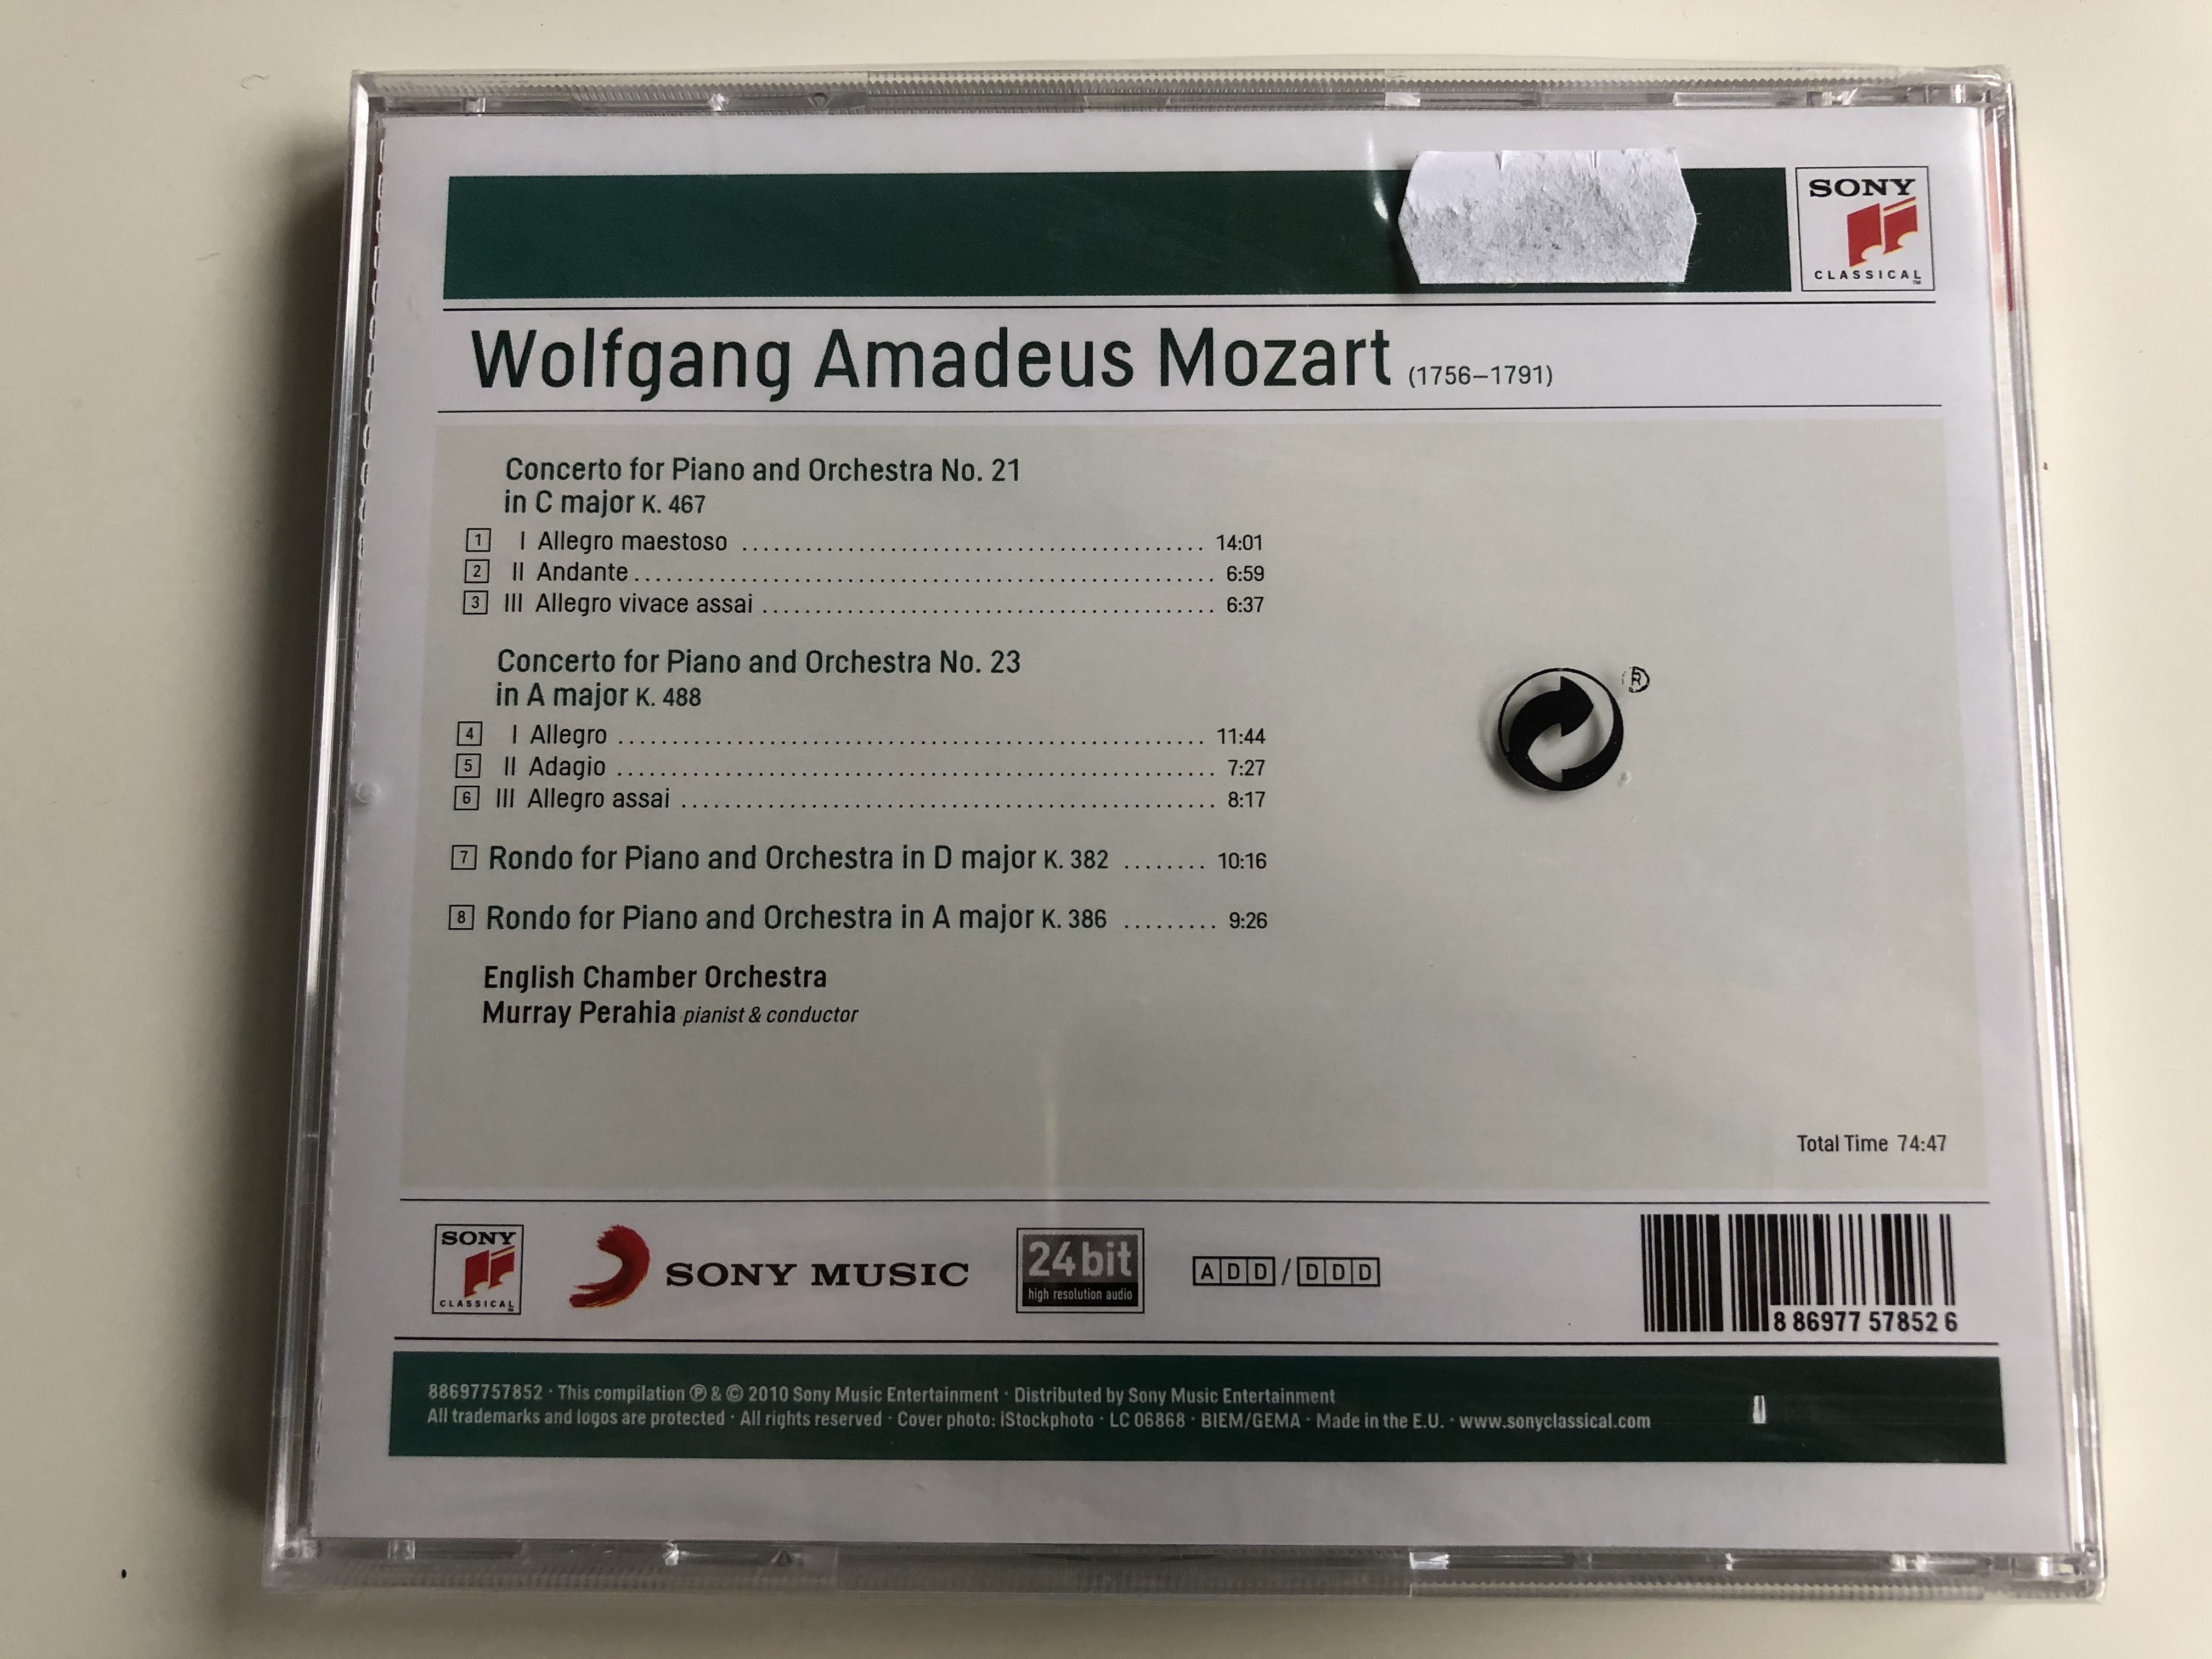 wolfgang-amadeus-mozart-piano-concertos-nos.-21-23-rondos-k.-382-386-murray-perahia-english-chamber-orchestra-sony-classical-audio-cd-2010-88697757852-2-.jpg